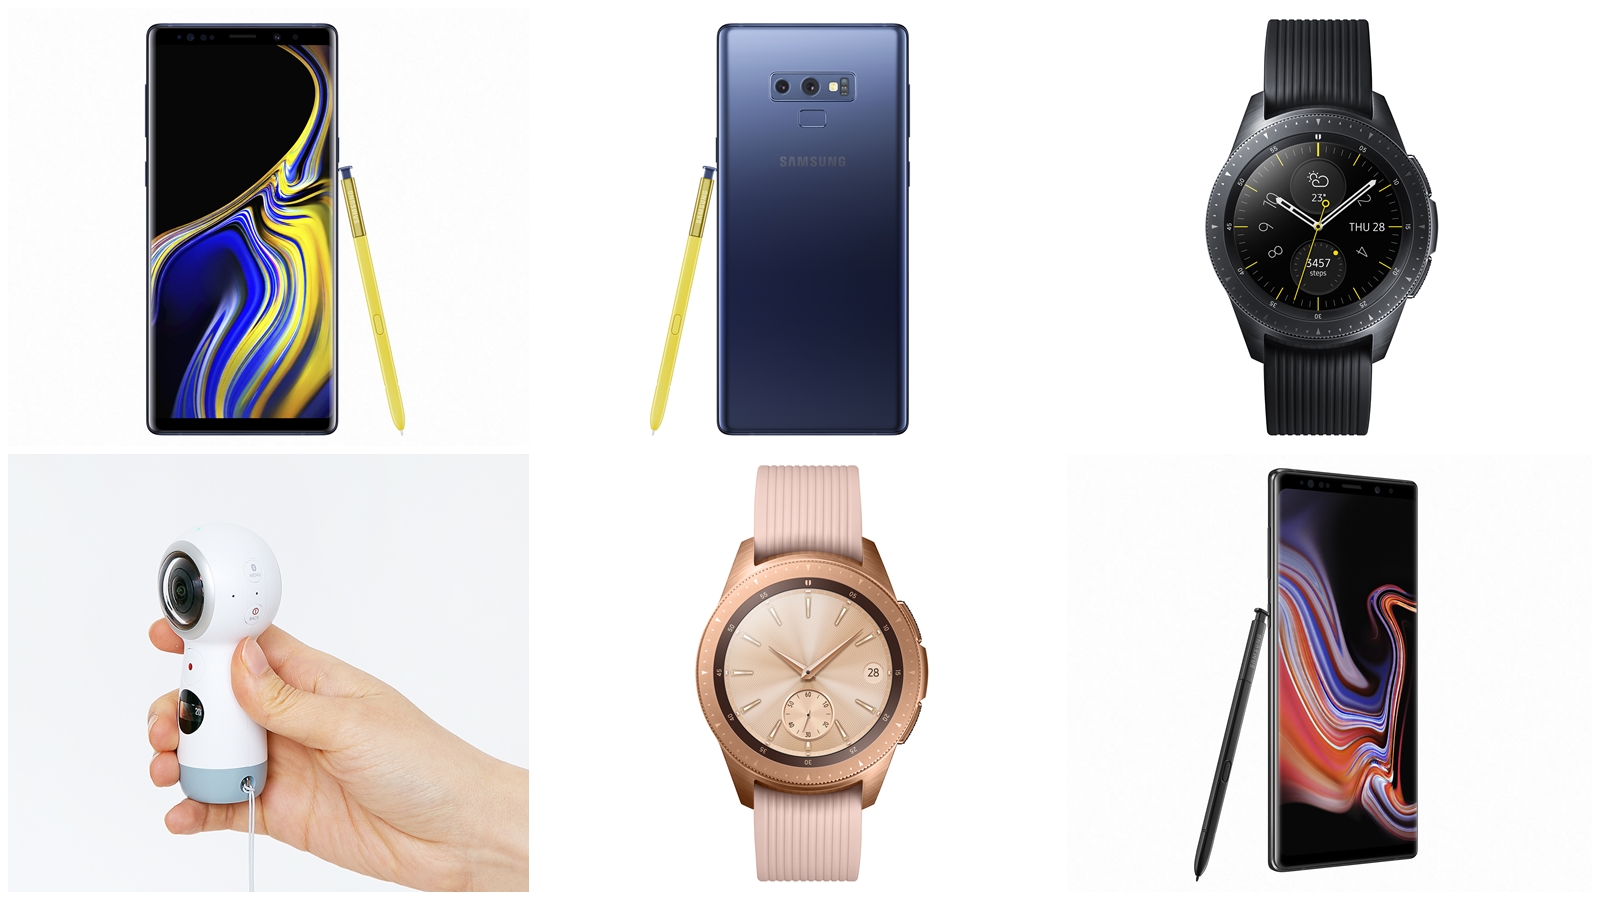  Testează Samsung Galaxy Note 9 și Galaxy Watch la F64!